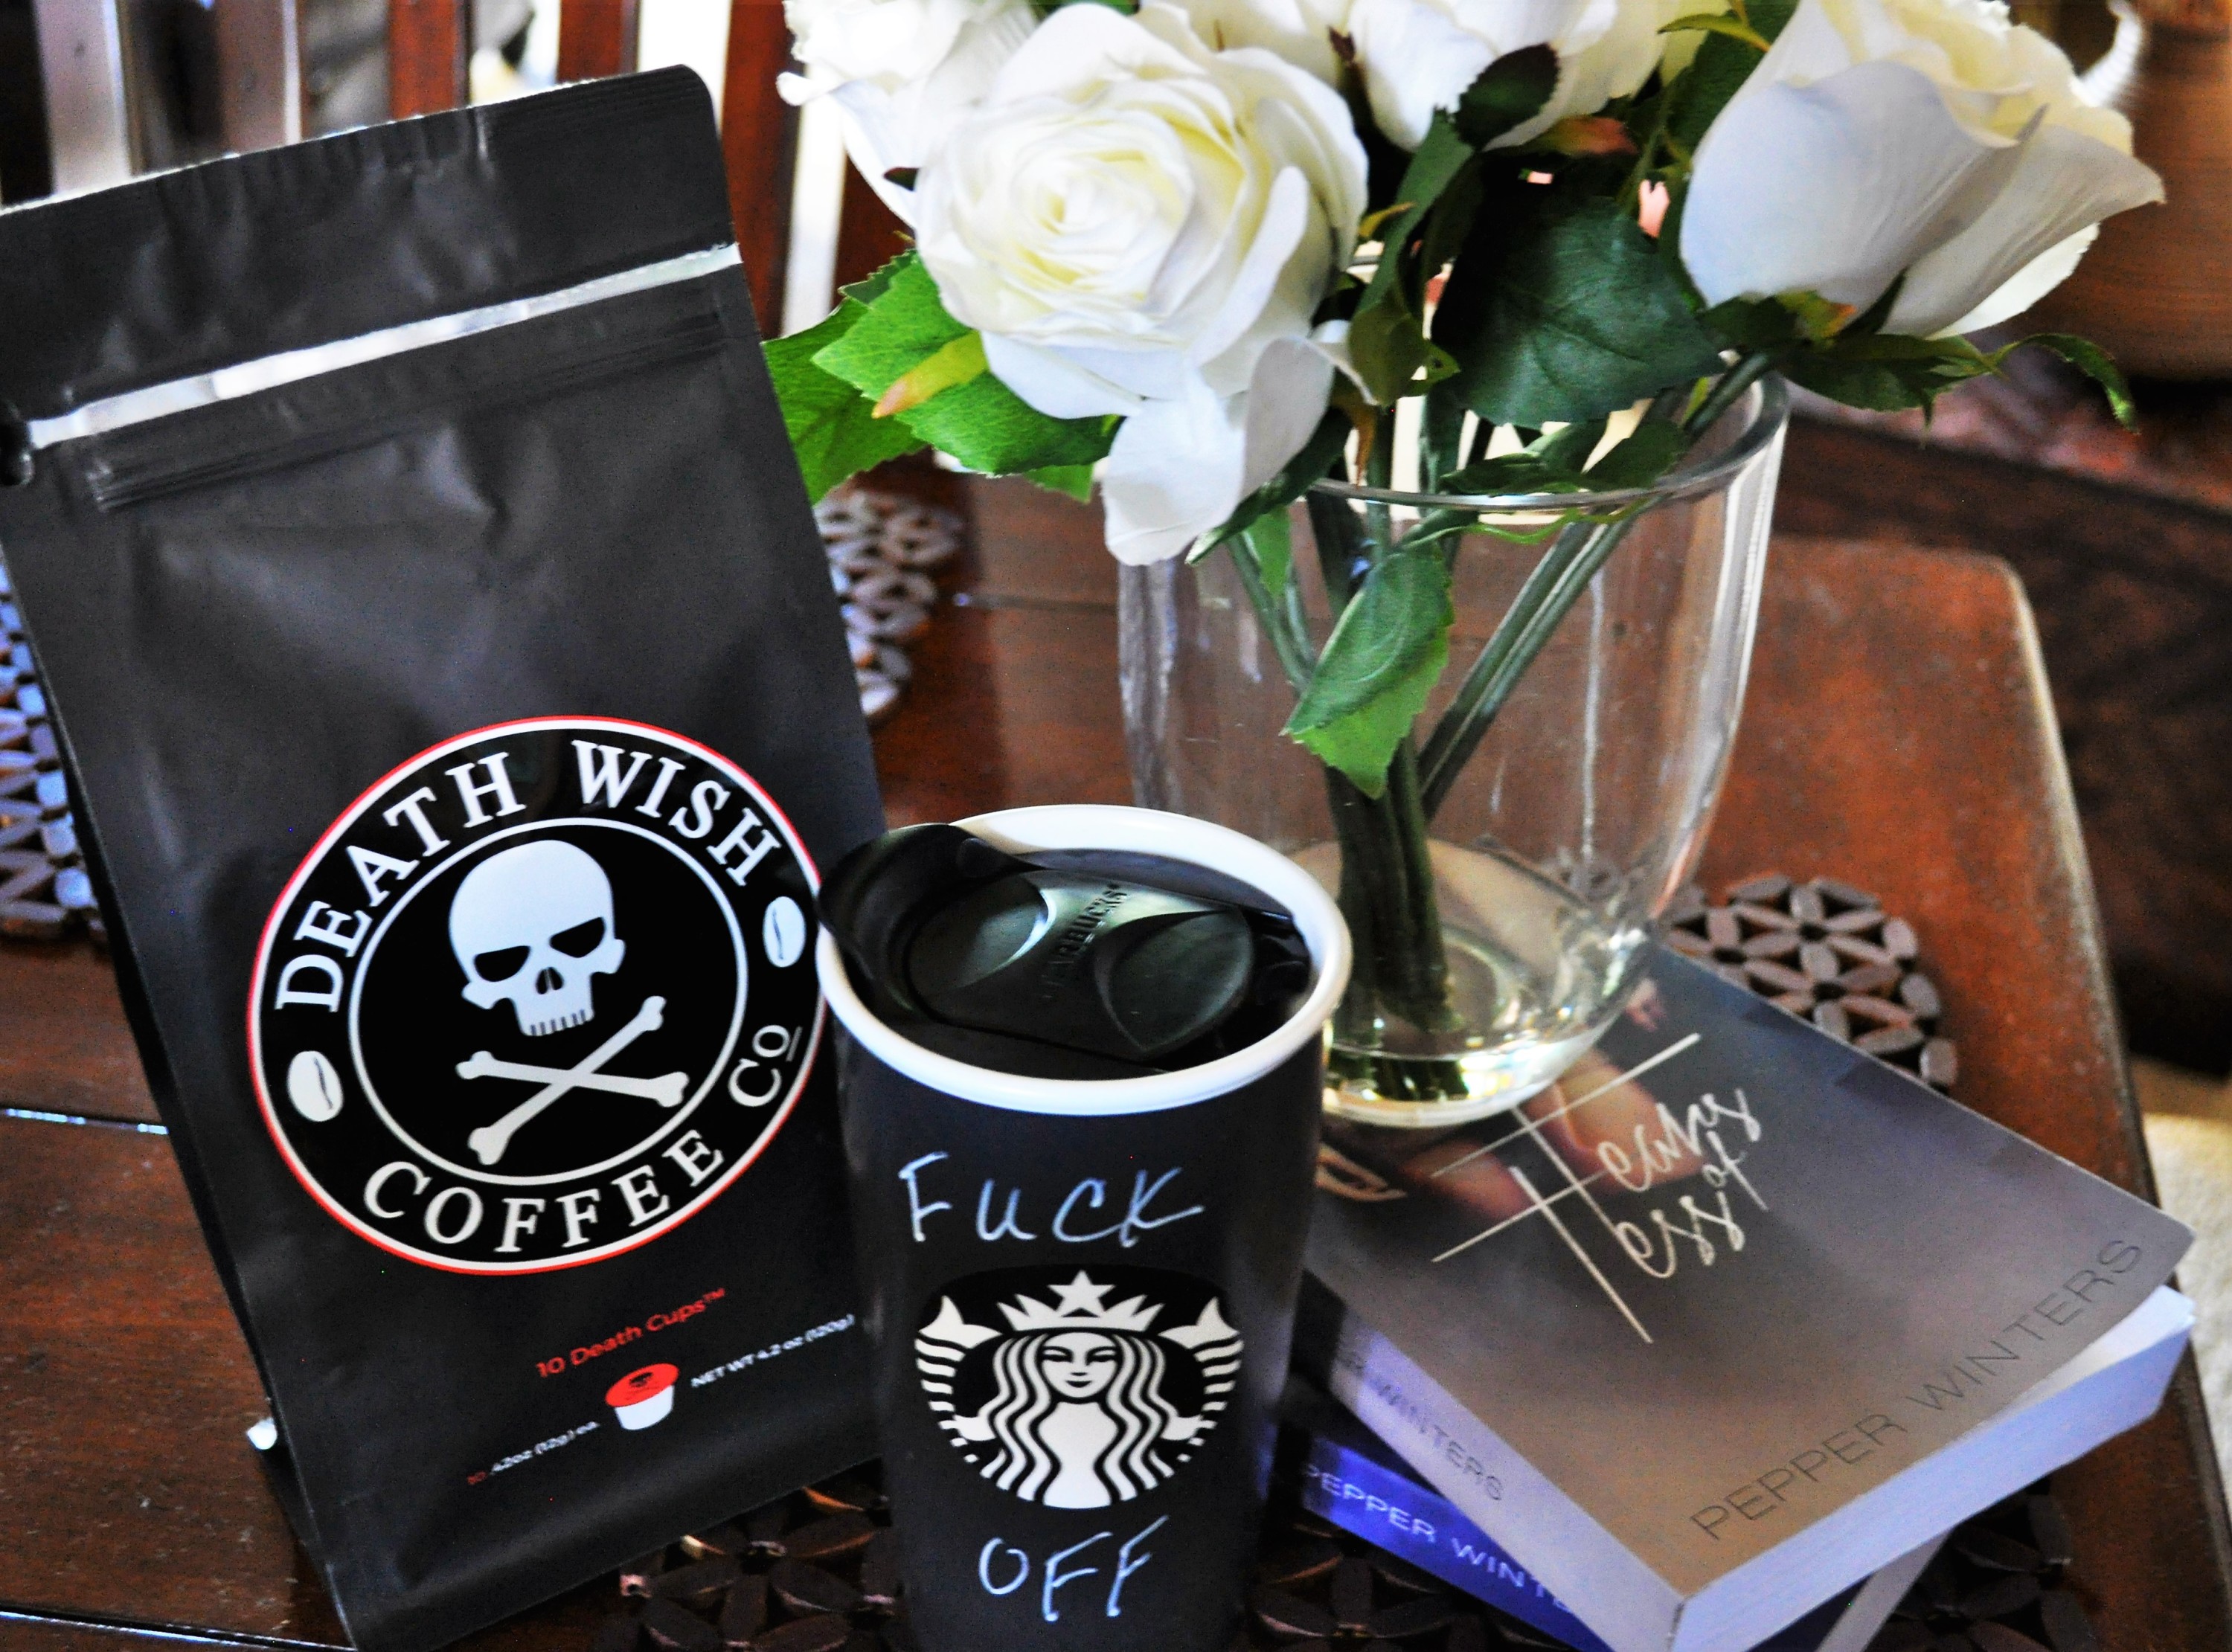 death wish coffee, starbucks writeable cup, table decor, kitchen decor